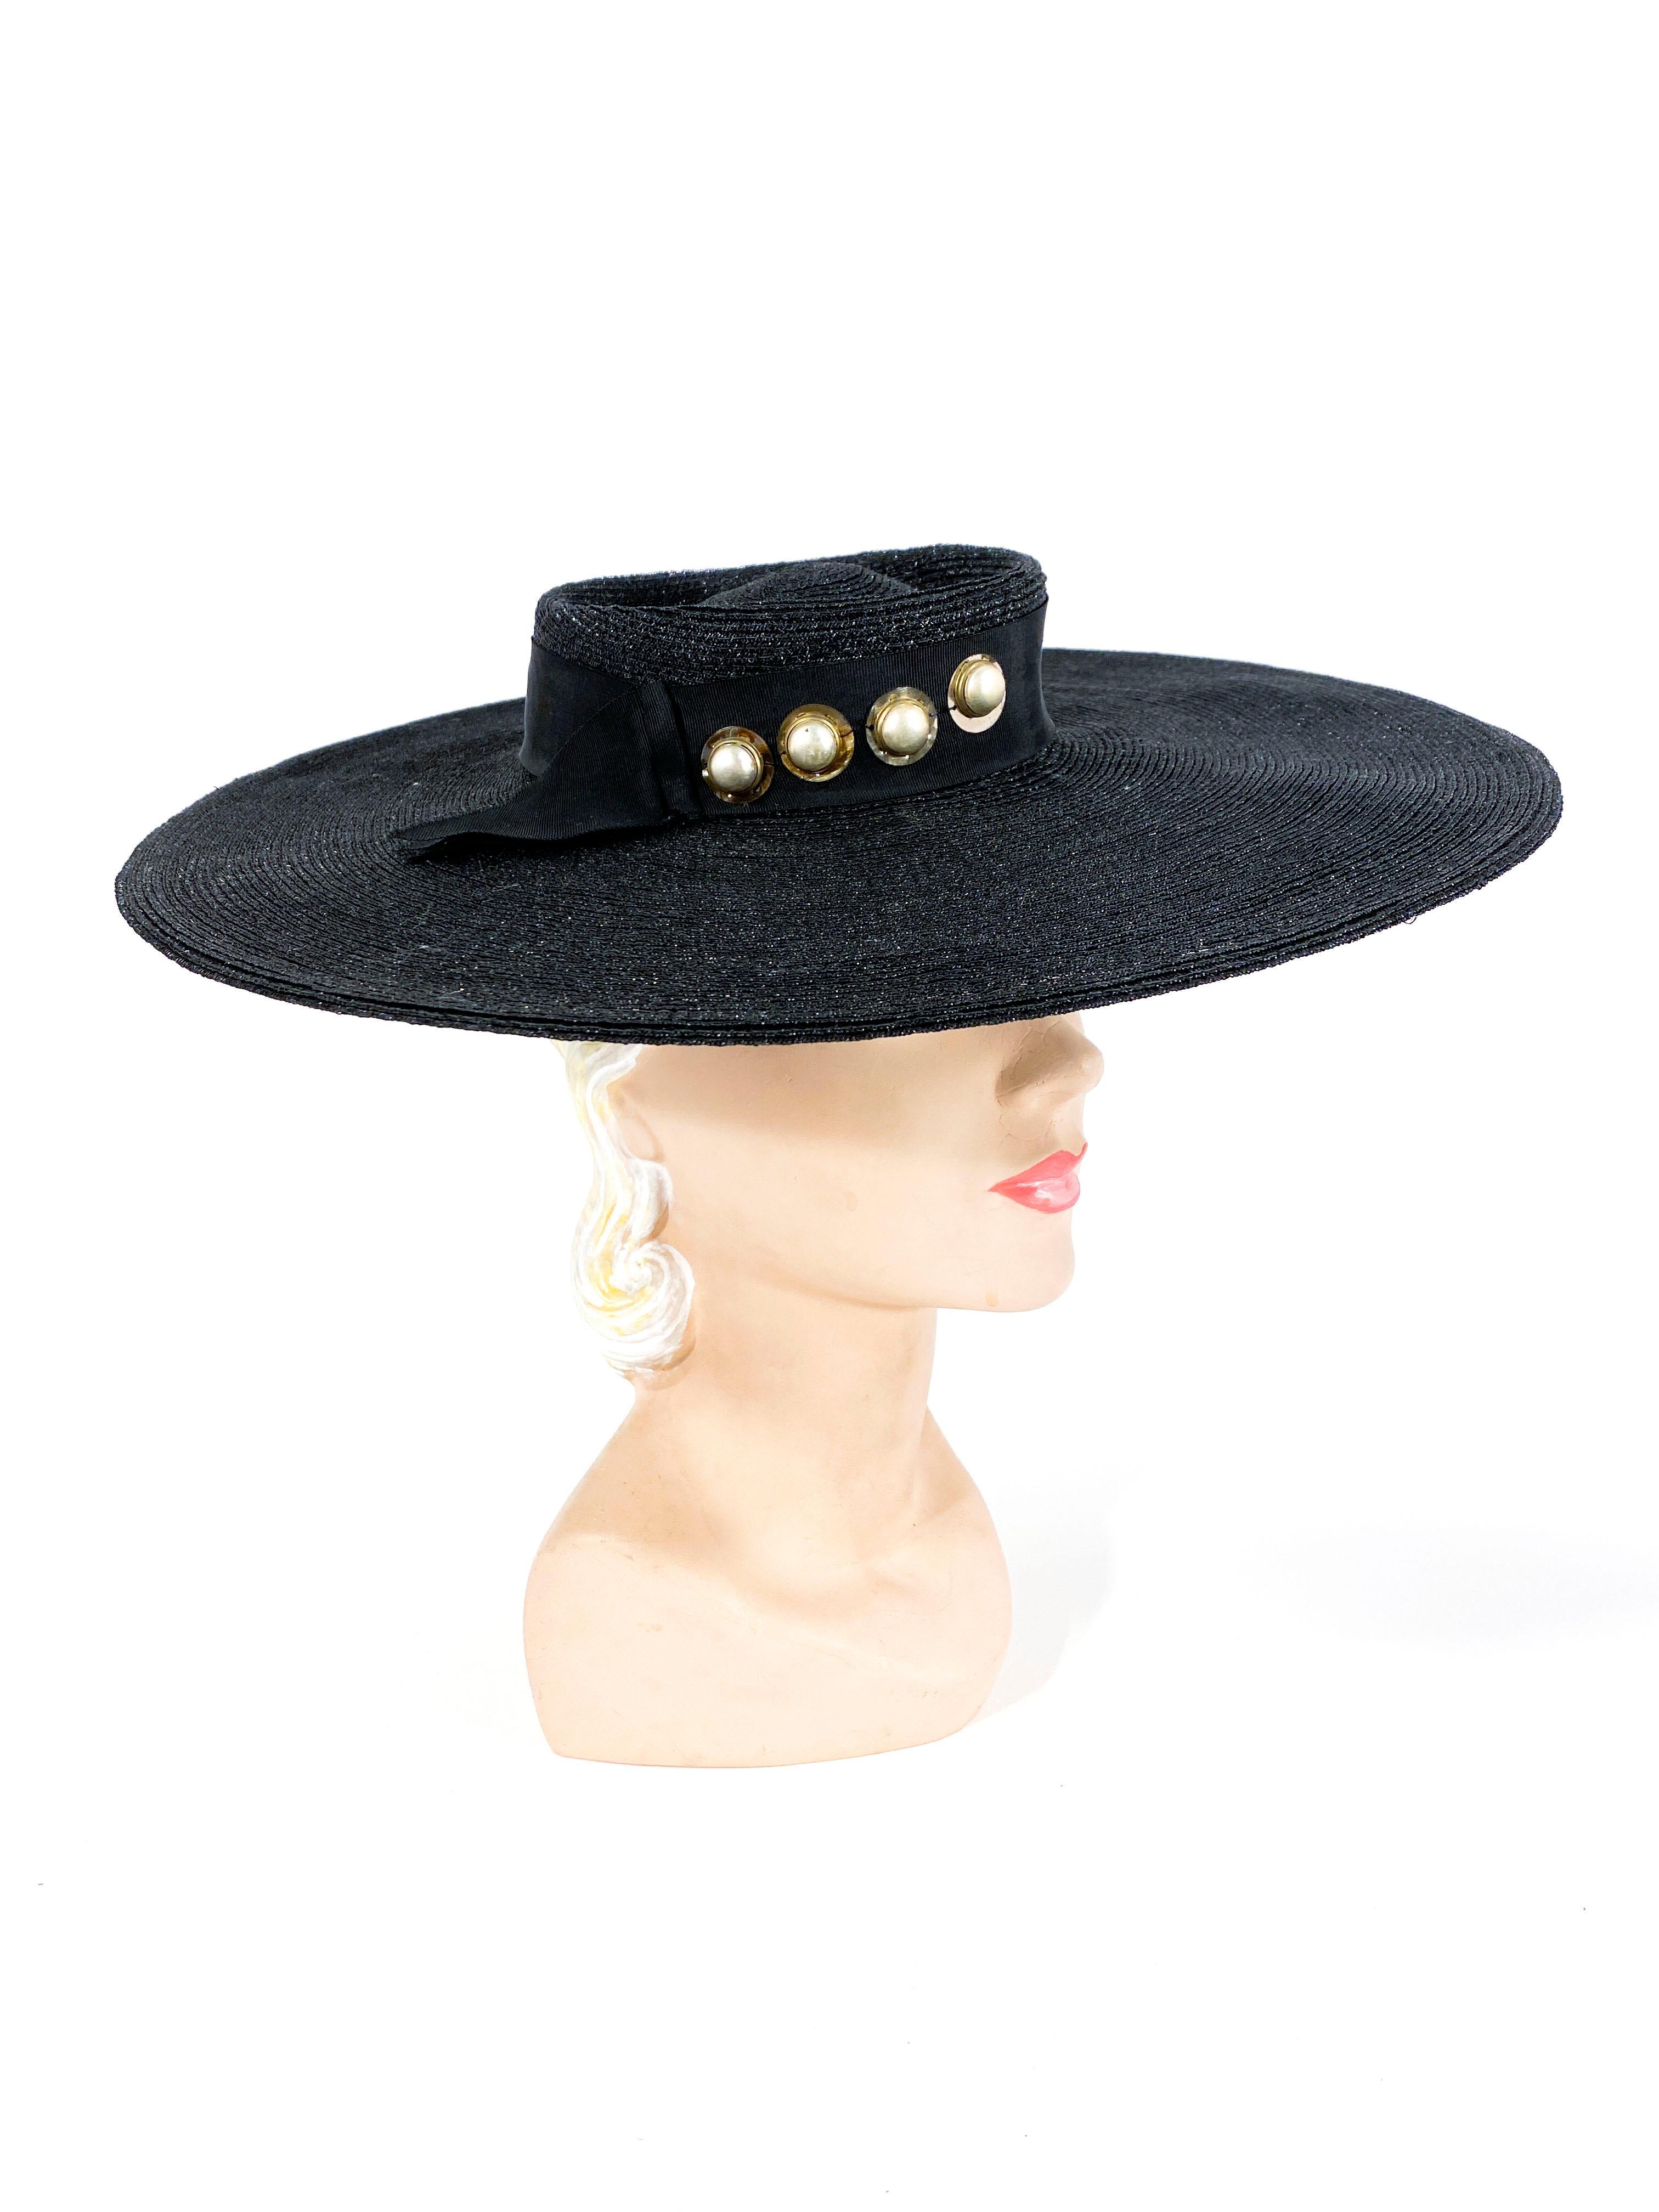 1930s hats